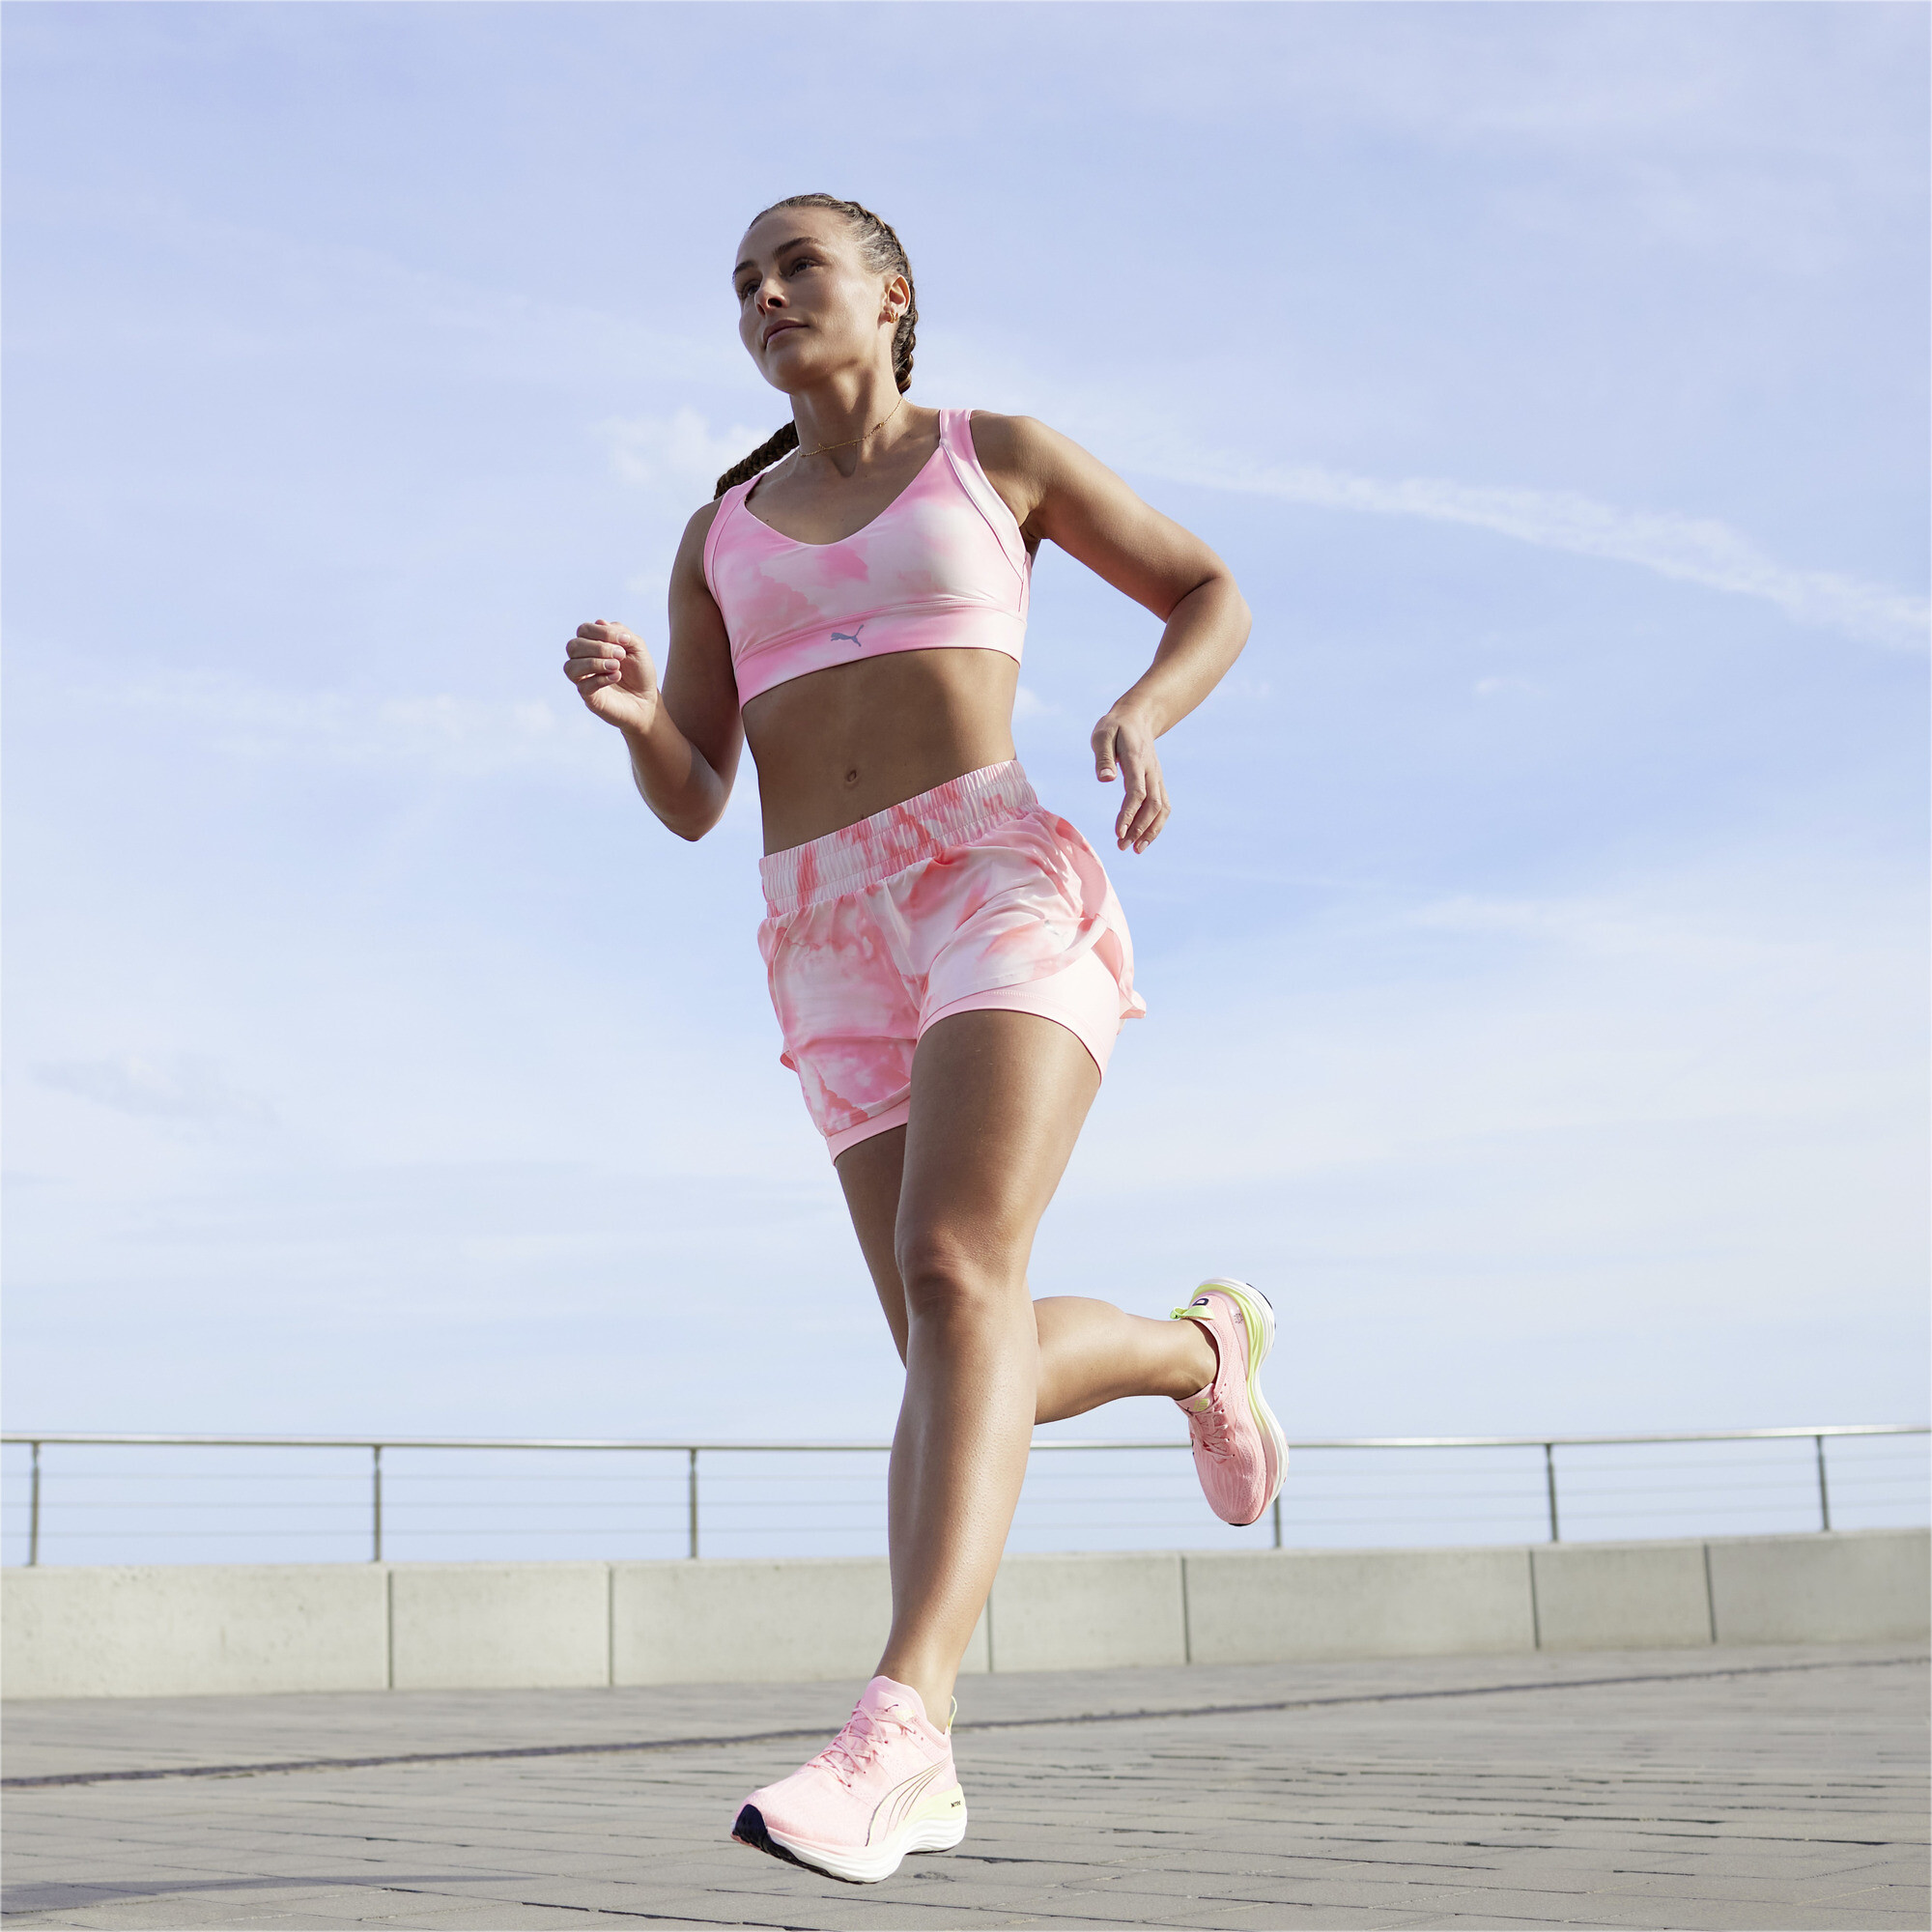 Women's PUMA Ultraweave 2-in-1 Running Shorts Women In Pink, Size Medium